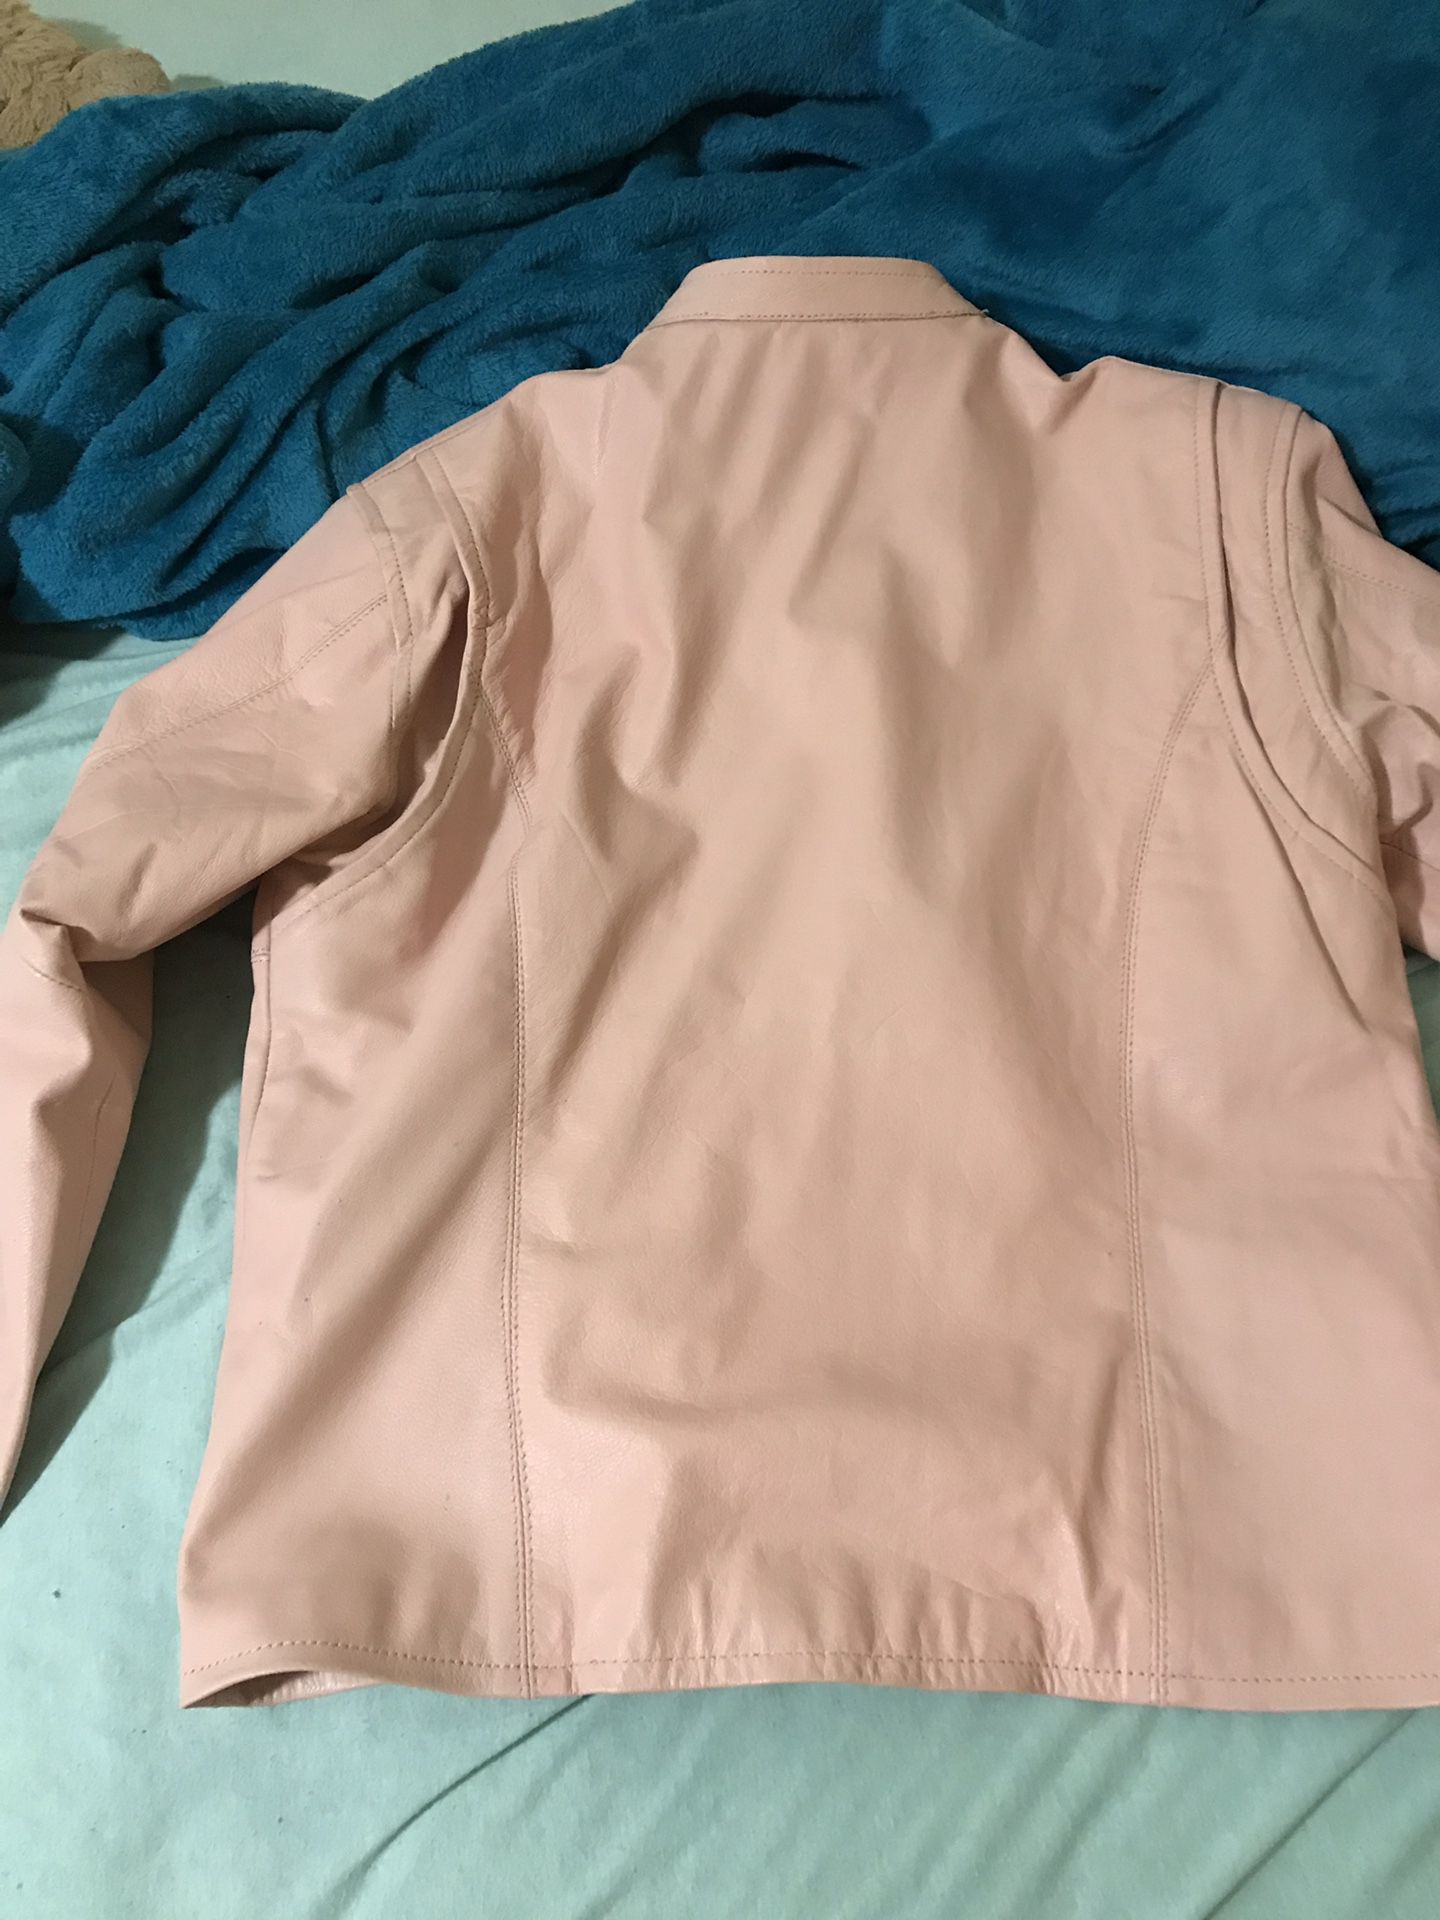 Women’s pink motorcycle jacket XL